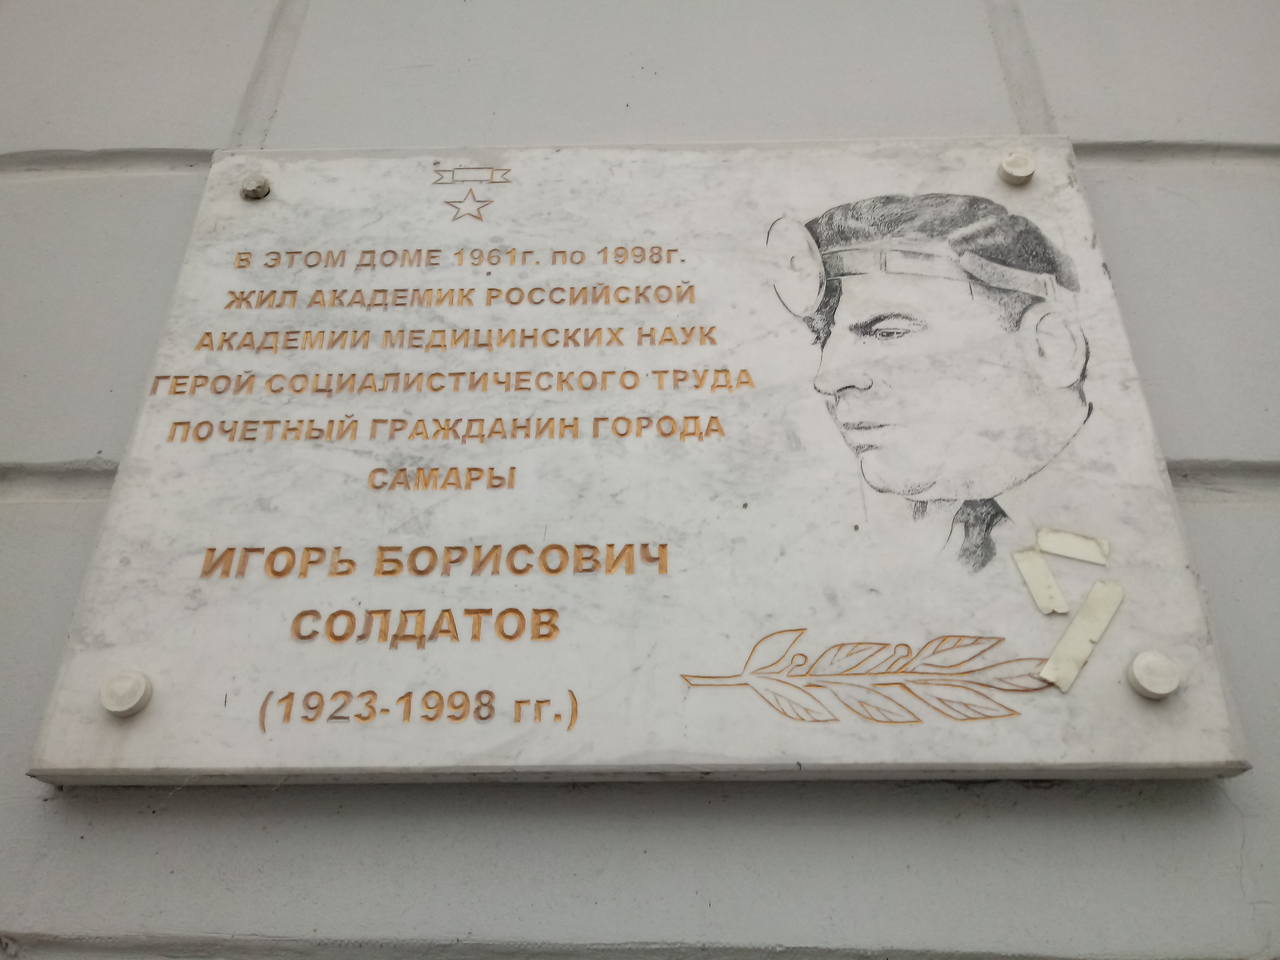 Samara, Молодогвардейская улица, 218. Samara — Memorial plaques